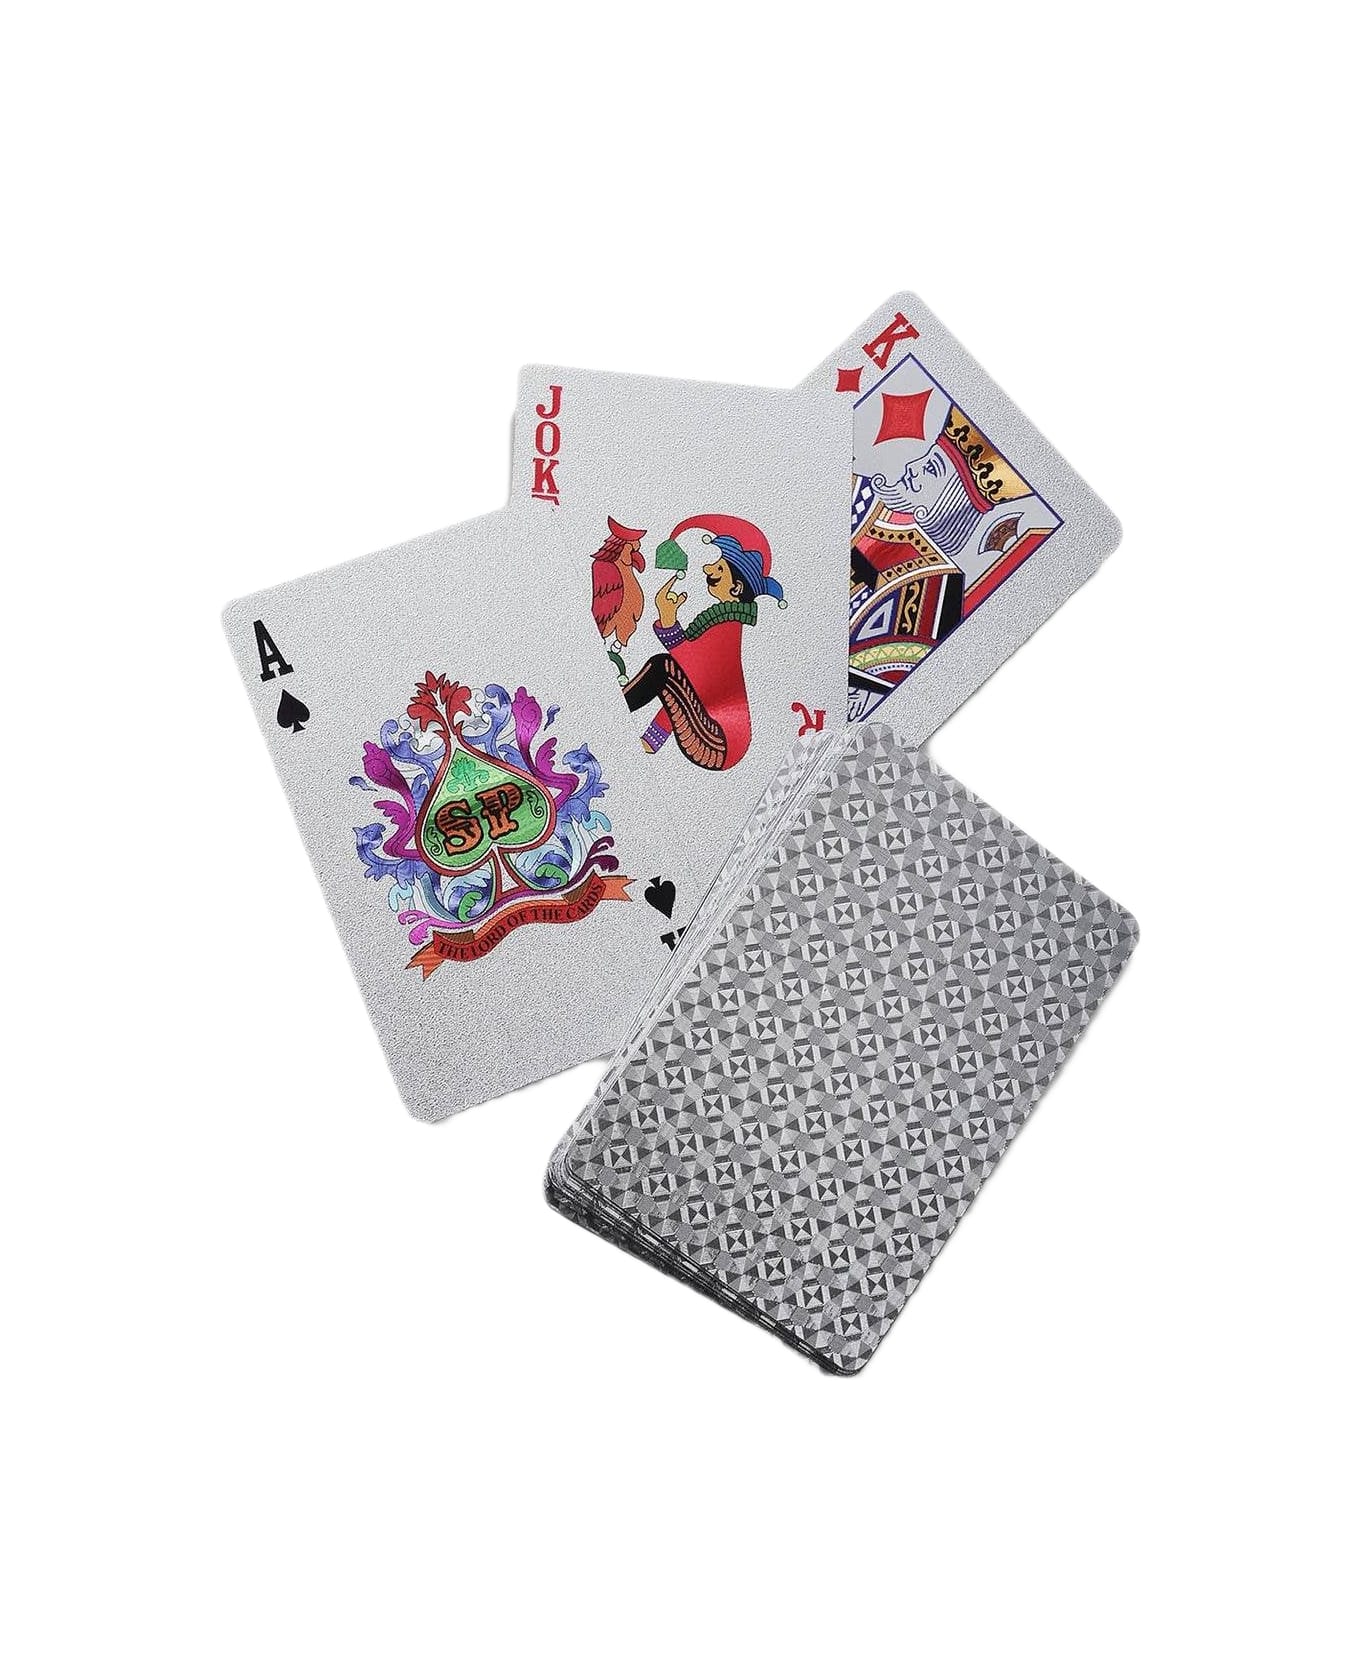 Larusmiani Playing Cards 'venezia' Game - Silver